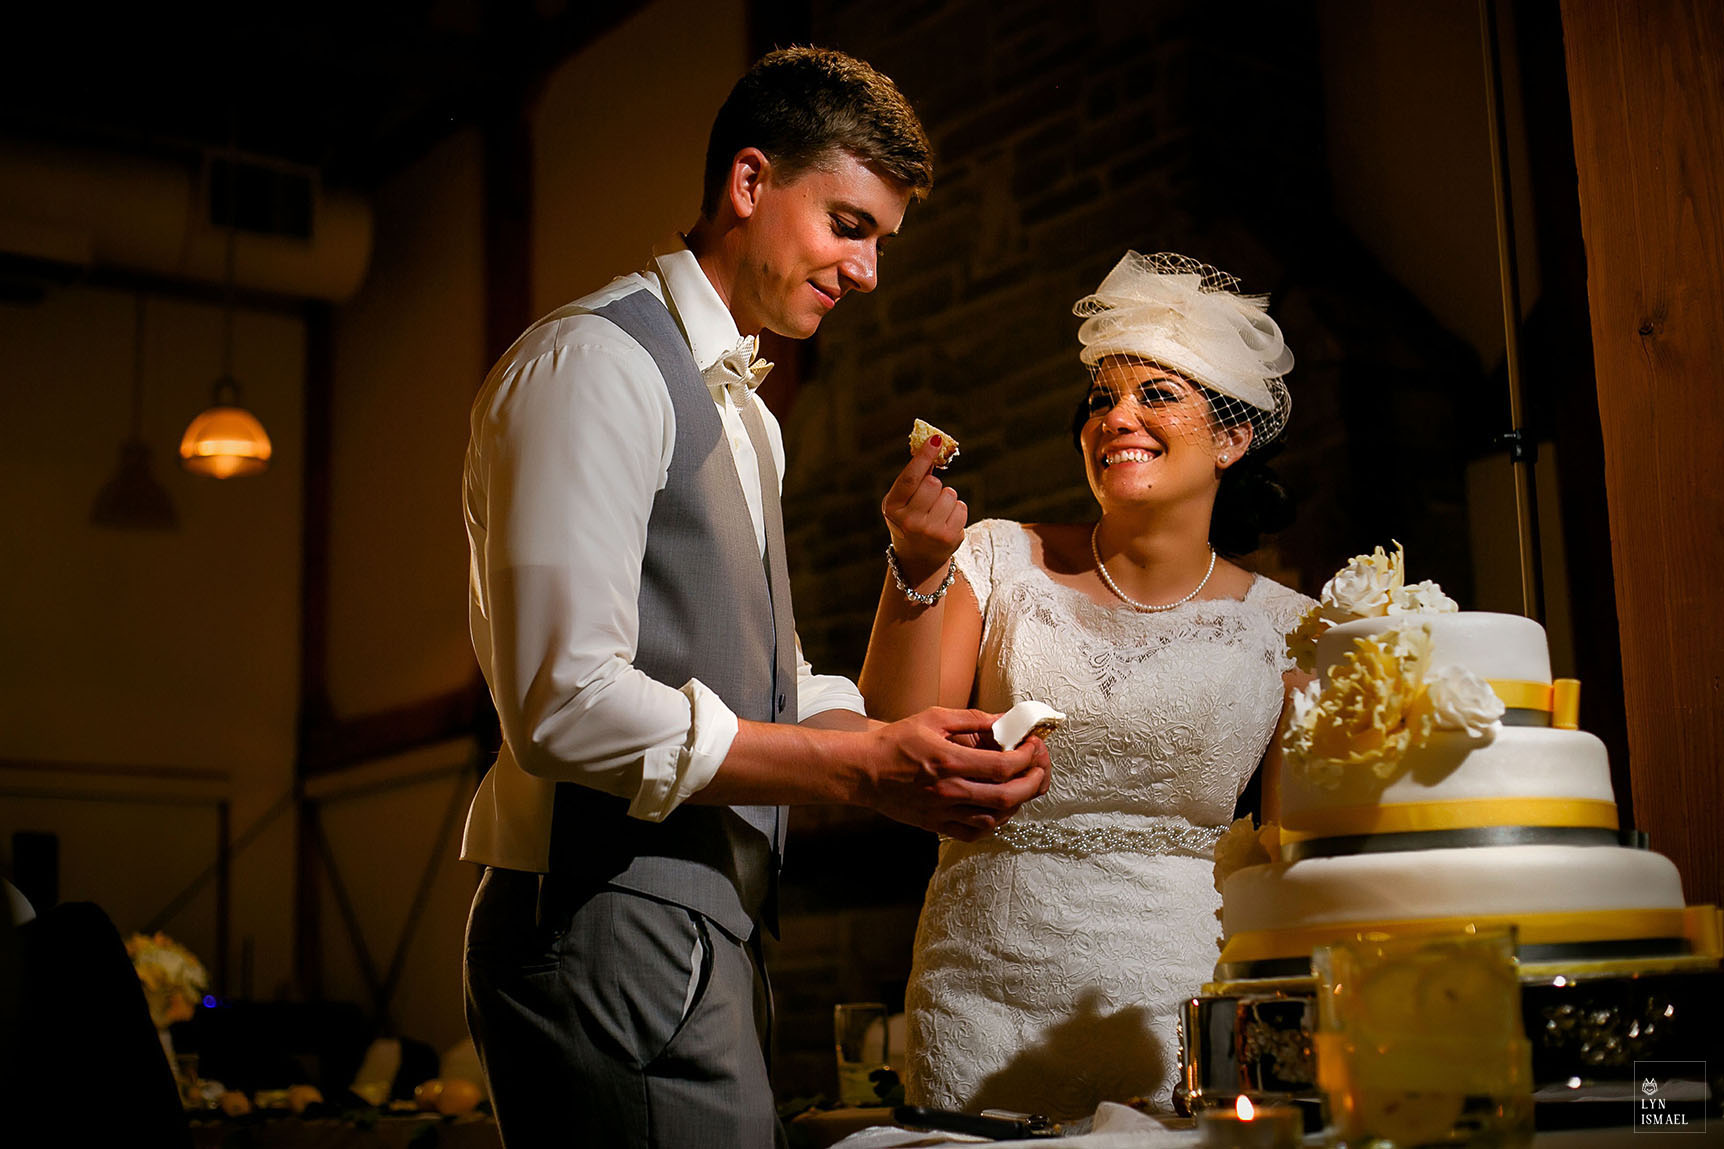 Bride and groom cut their cake at their wedding reception inside Grey Silo in Waterloo, Ontario